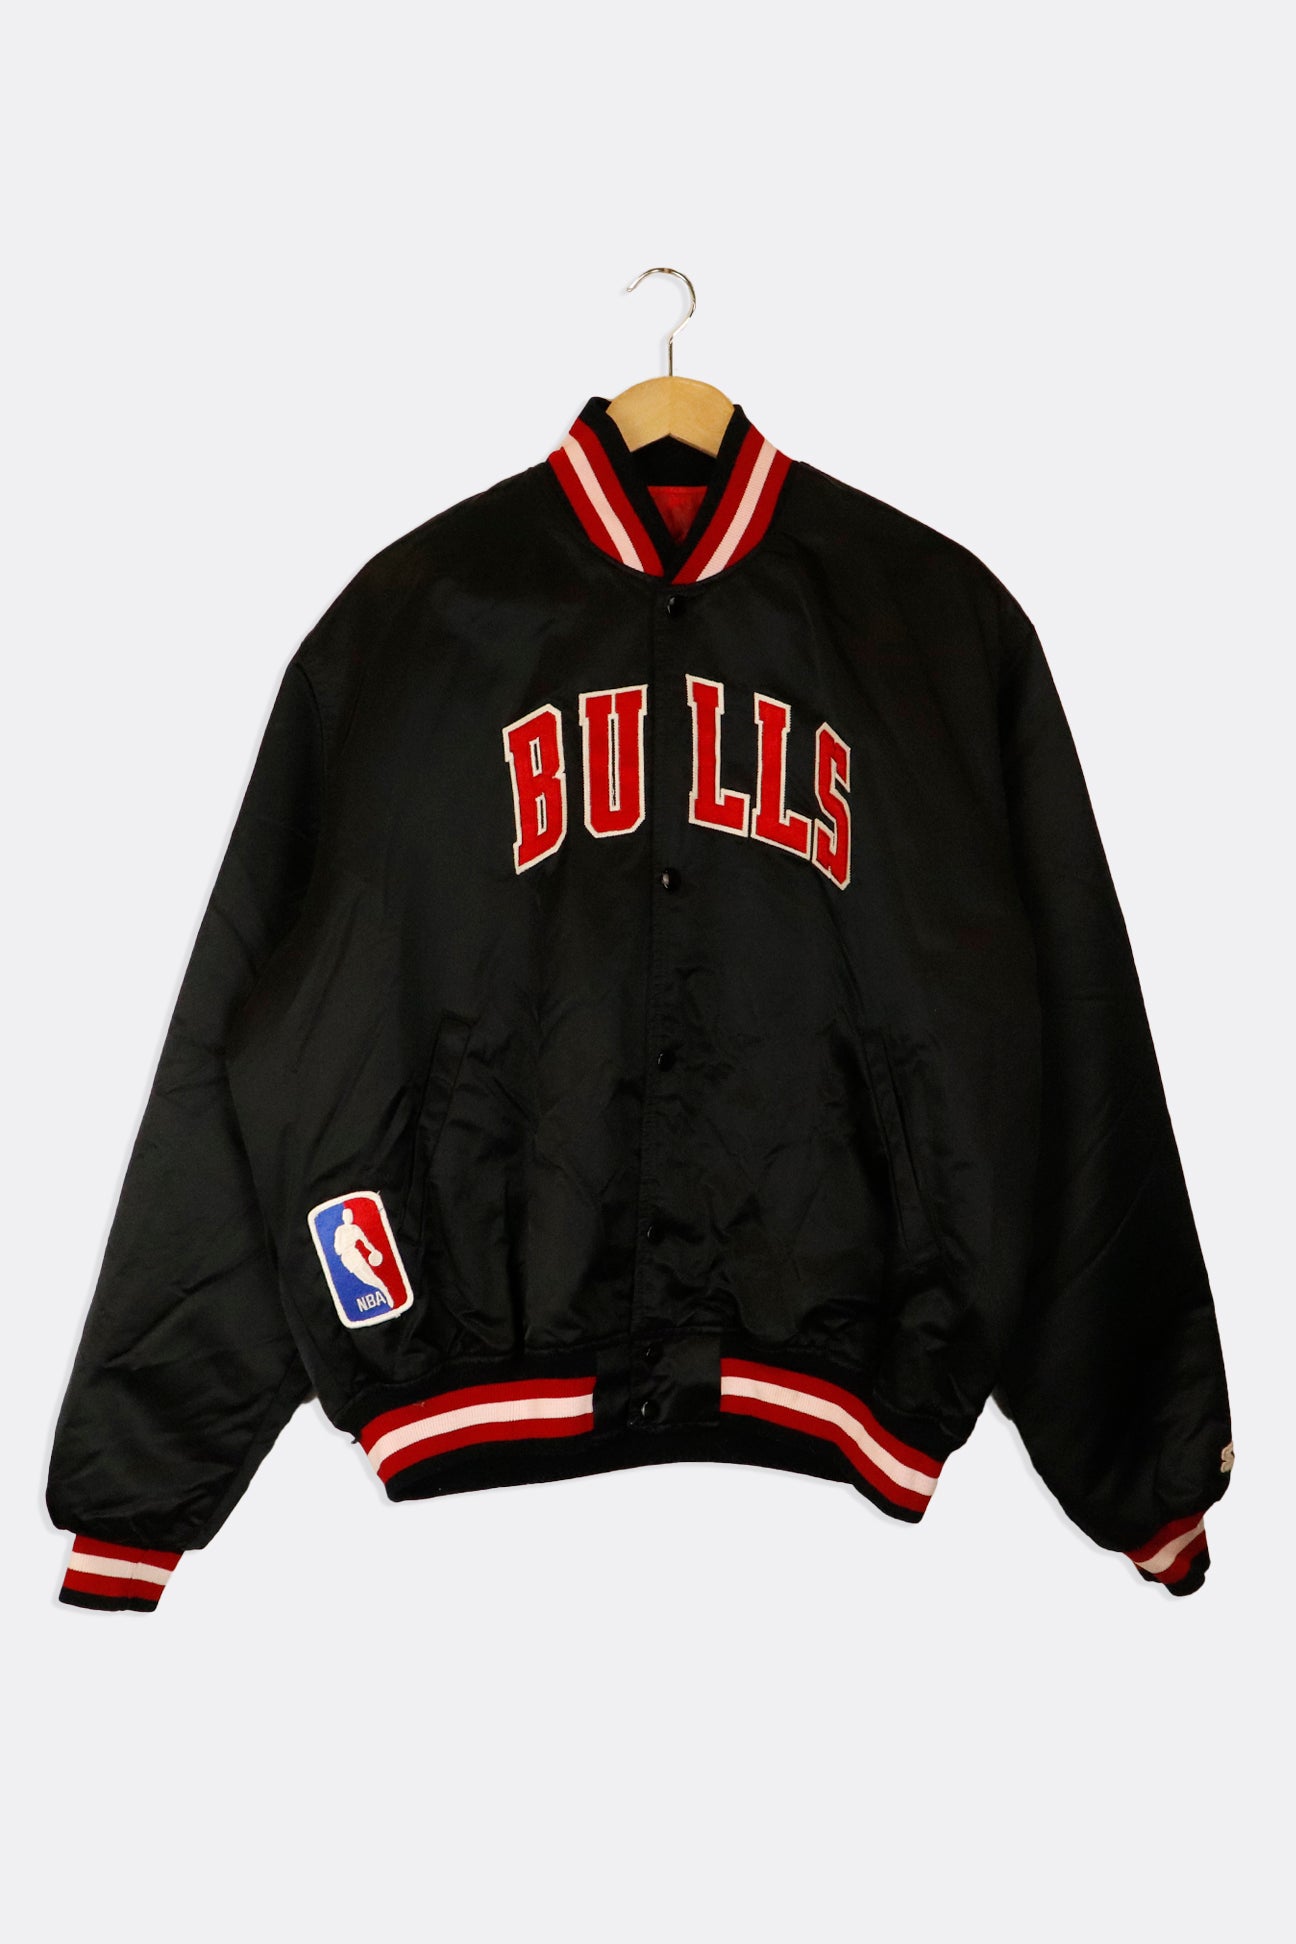 vintage chicago bulls bomber jacket